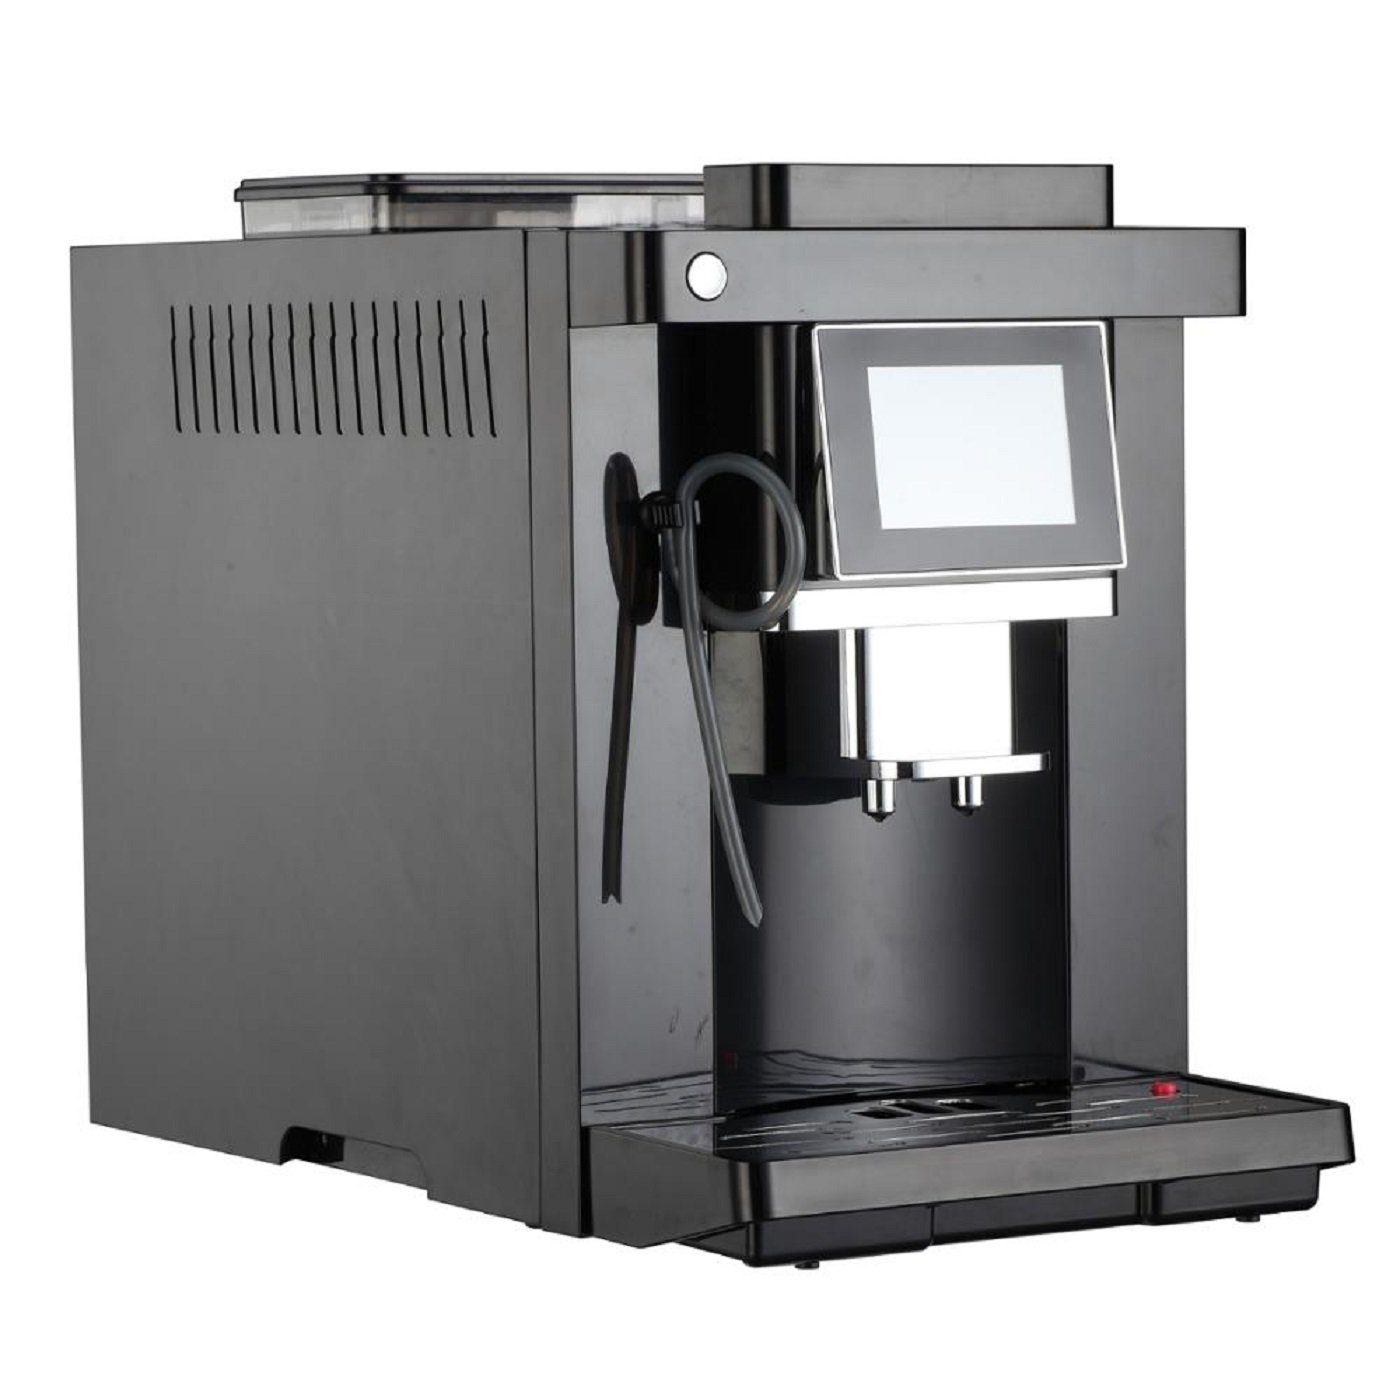 Cappuccino, Selbstreinigungsfunktion Coffee COLET CLT-Q007, Kaffee, Kaffeevollautomat Knopfdruck, auf Kaffeevollautomat Espresso, Maschine